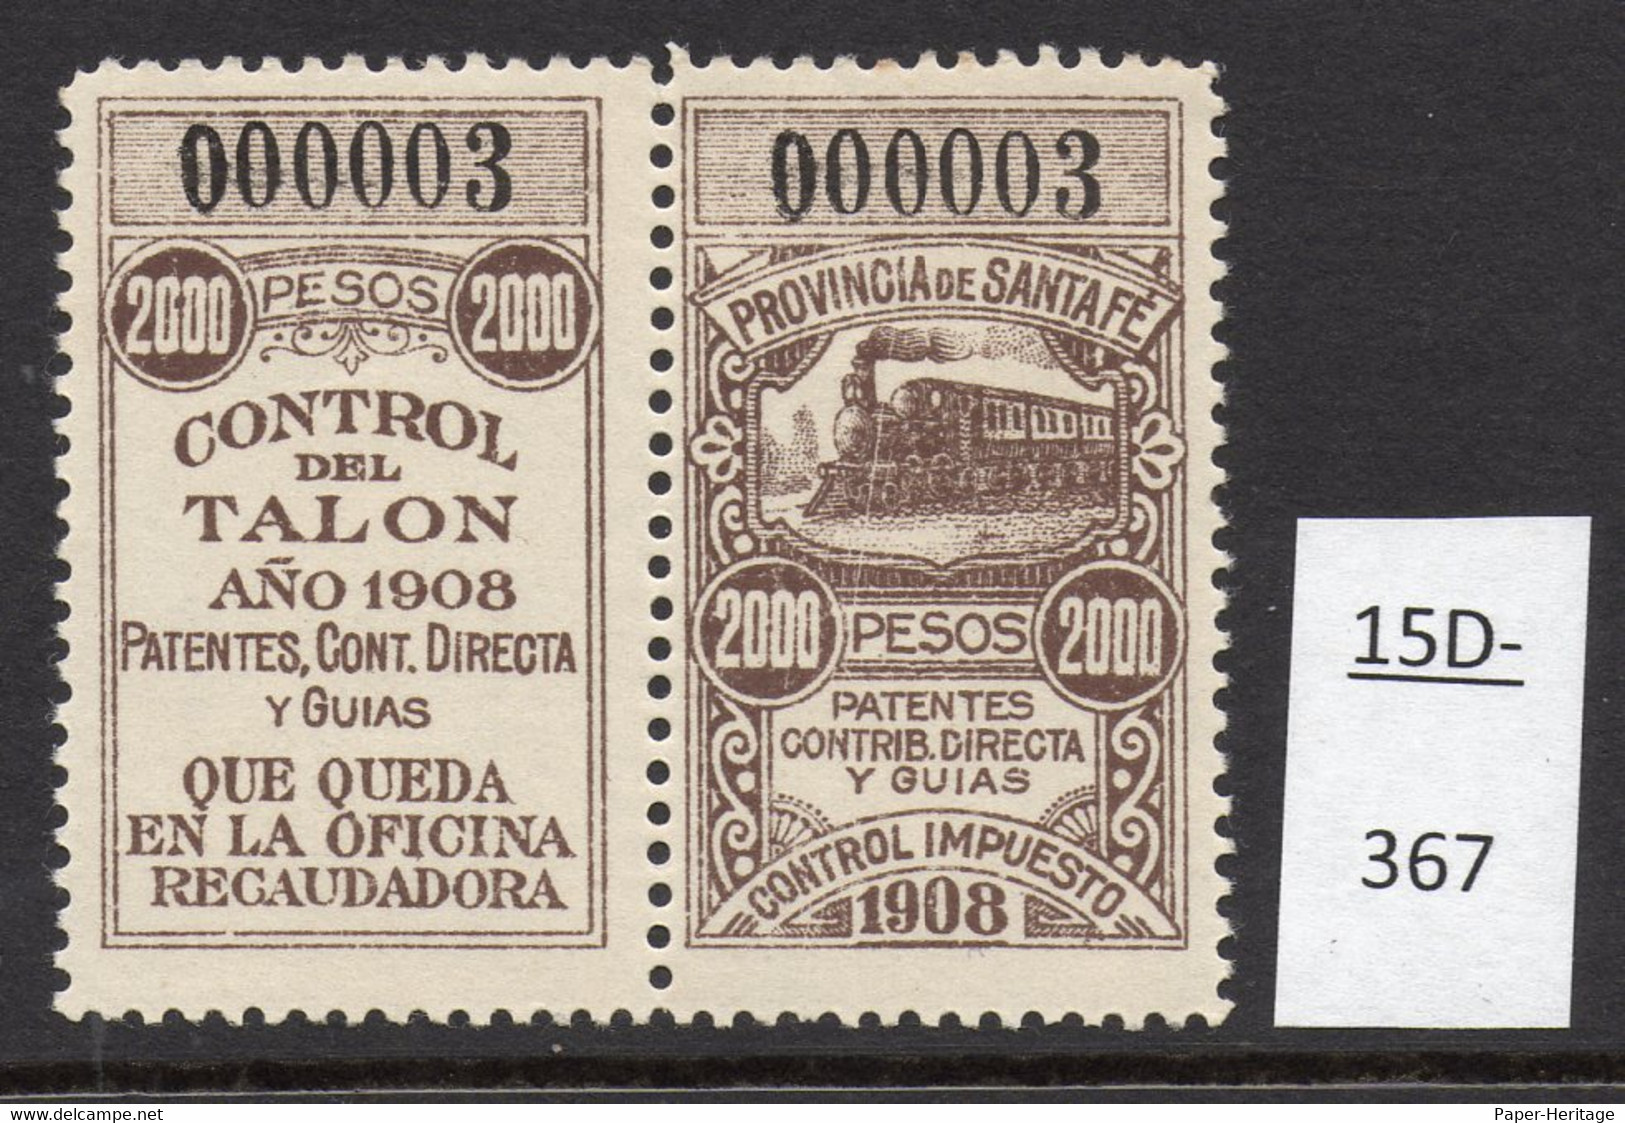 Argentina 1908 Santa Fe Revenue Steam Train – Railway – Locomotive 2000 Pesos With Talon MH - Unused Stamps